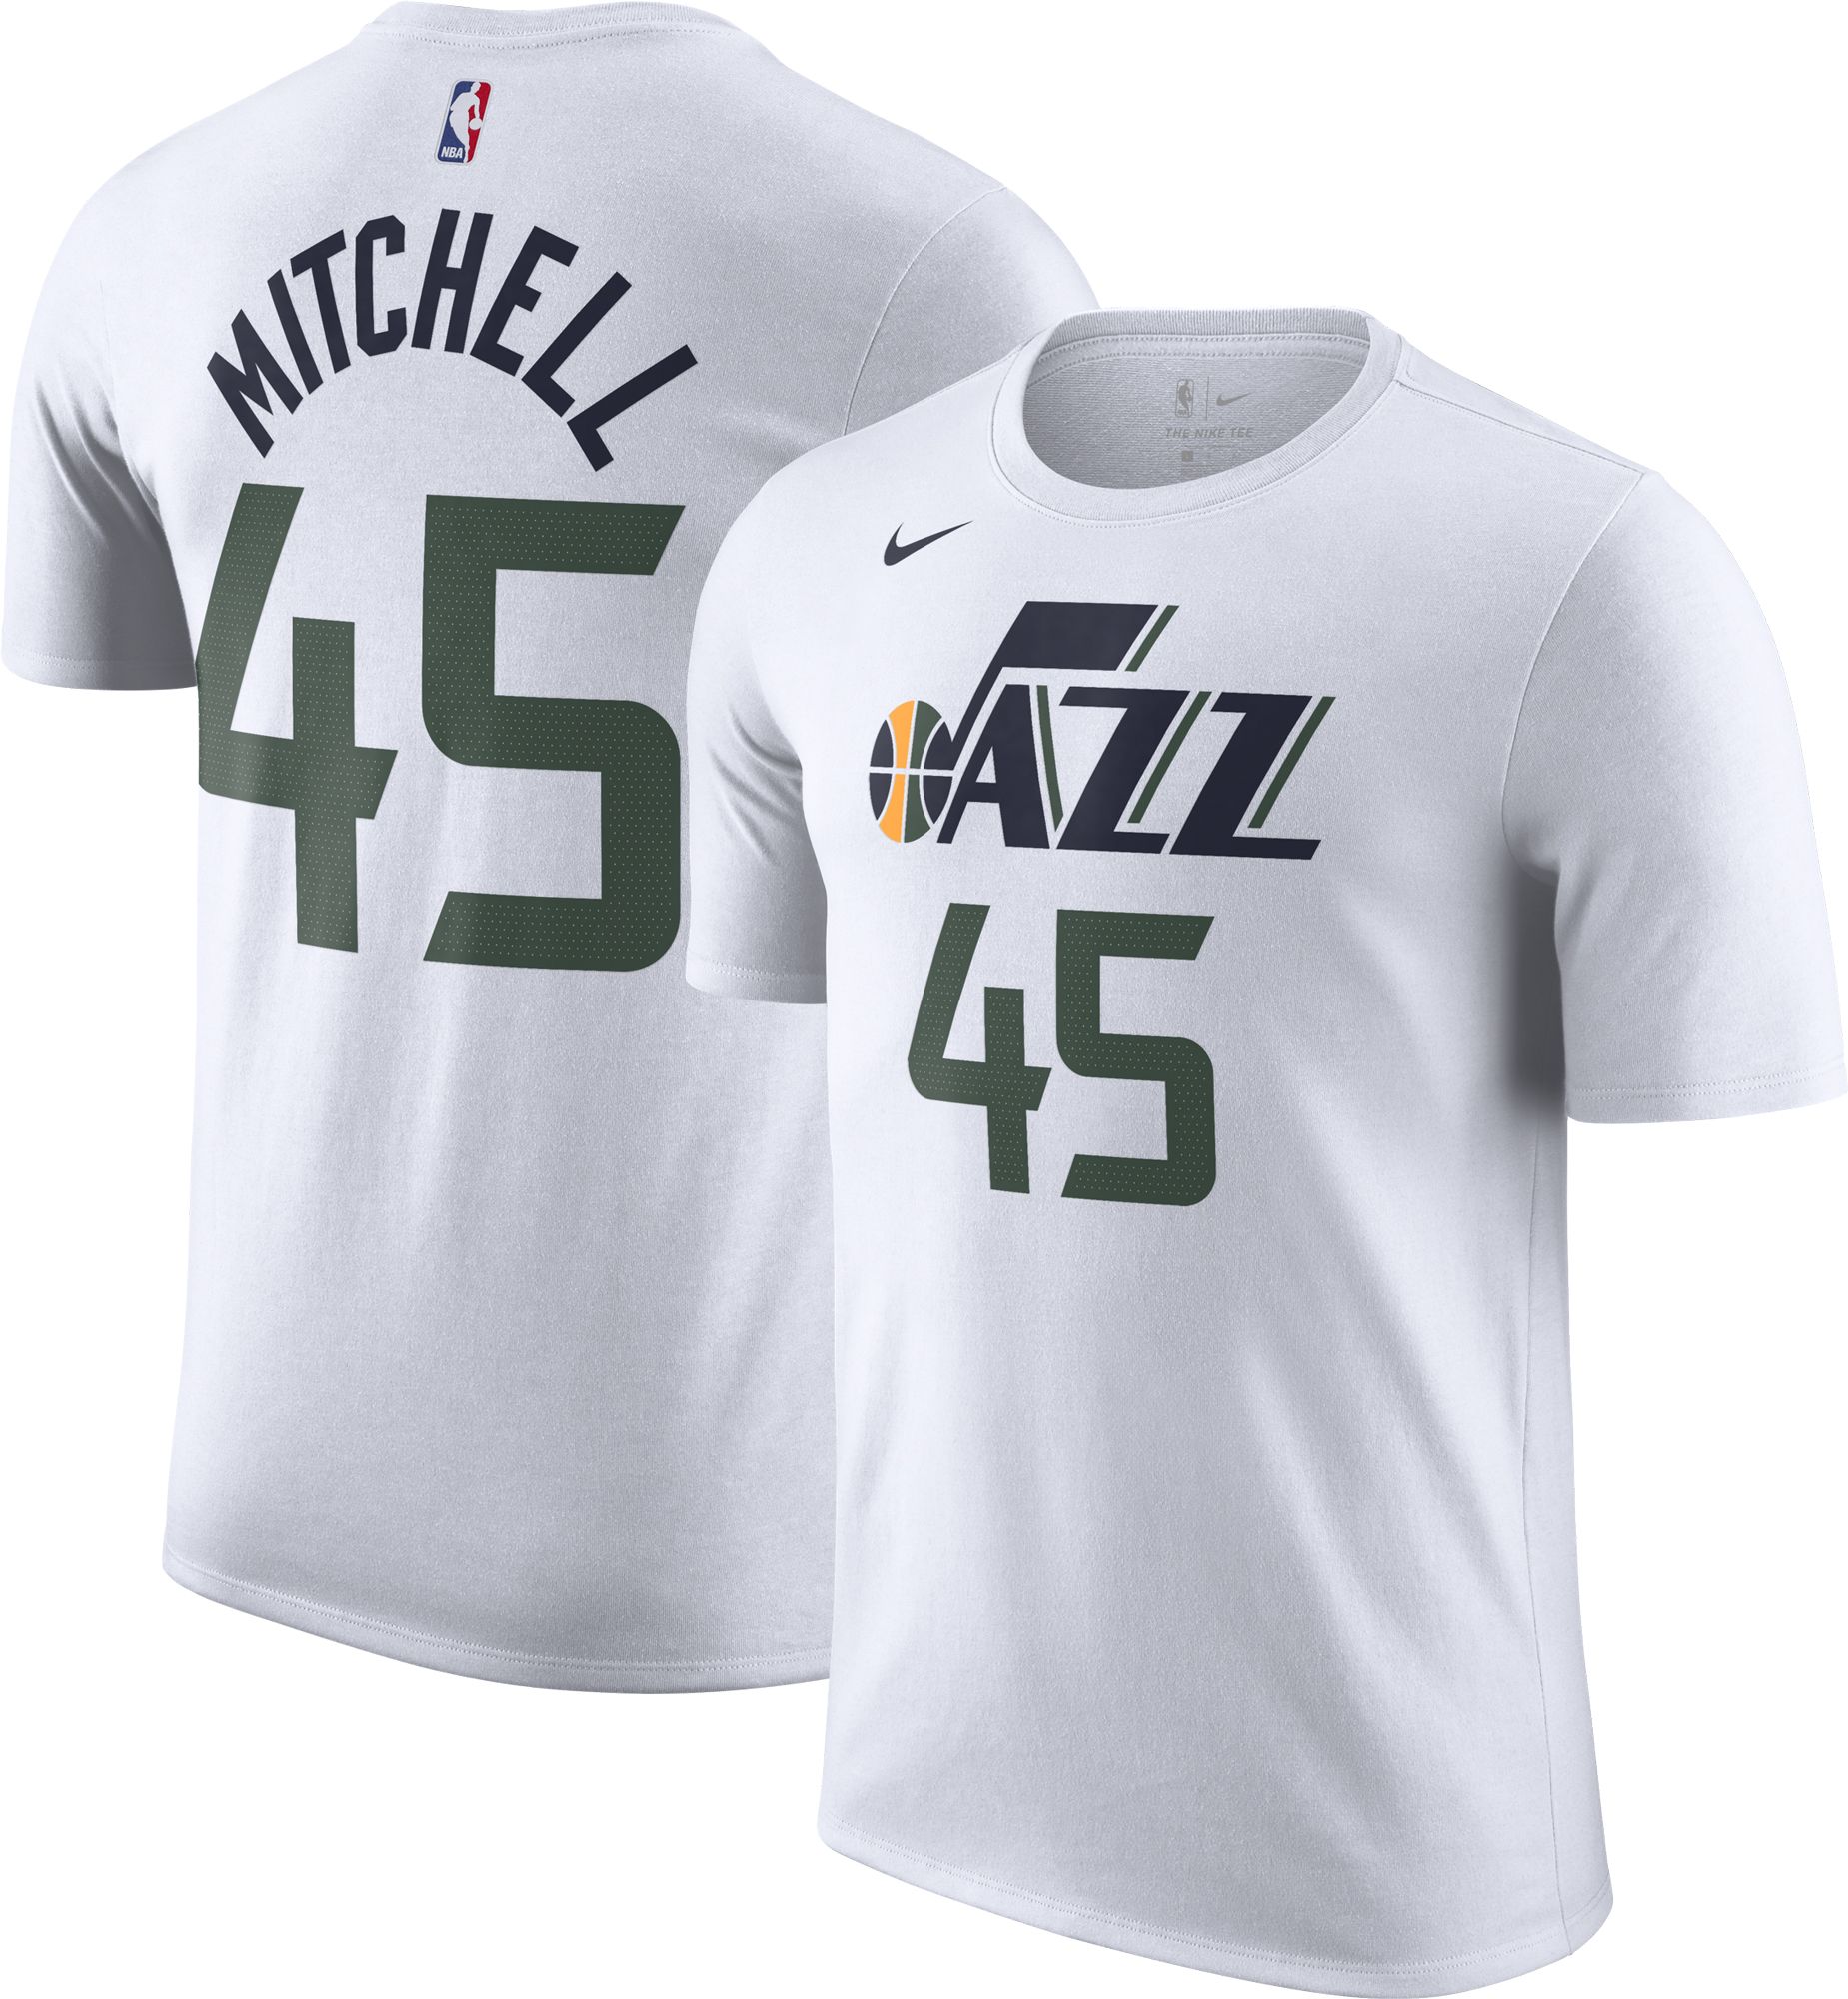  Nike Men's Donovan Mitchell #45 Utah Jazz T-Shirt  Cotton/Polyester Blend BQ1573 Blue (X-Large) : Sports & Outdoors